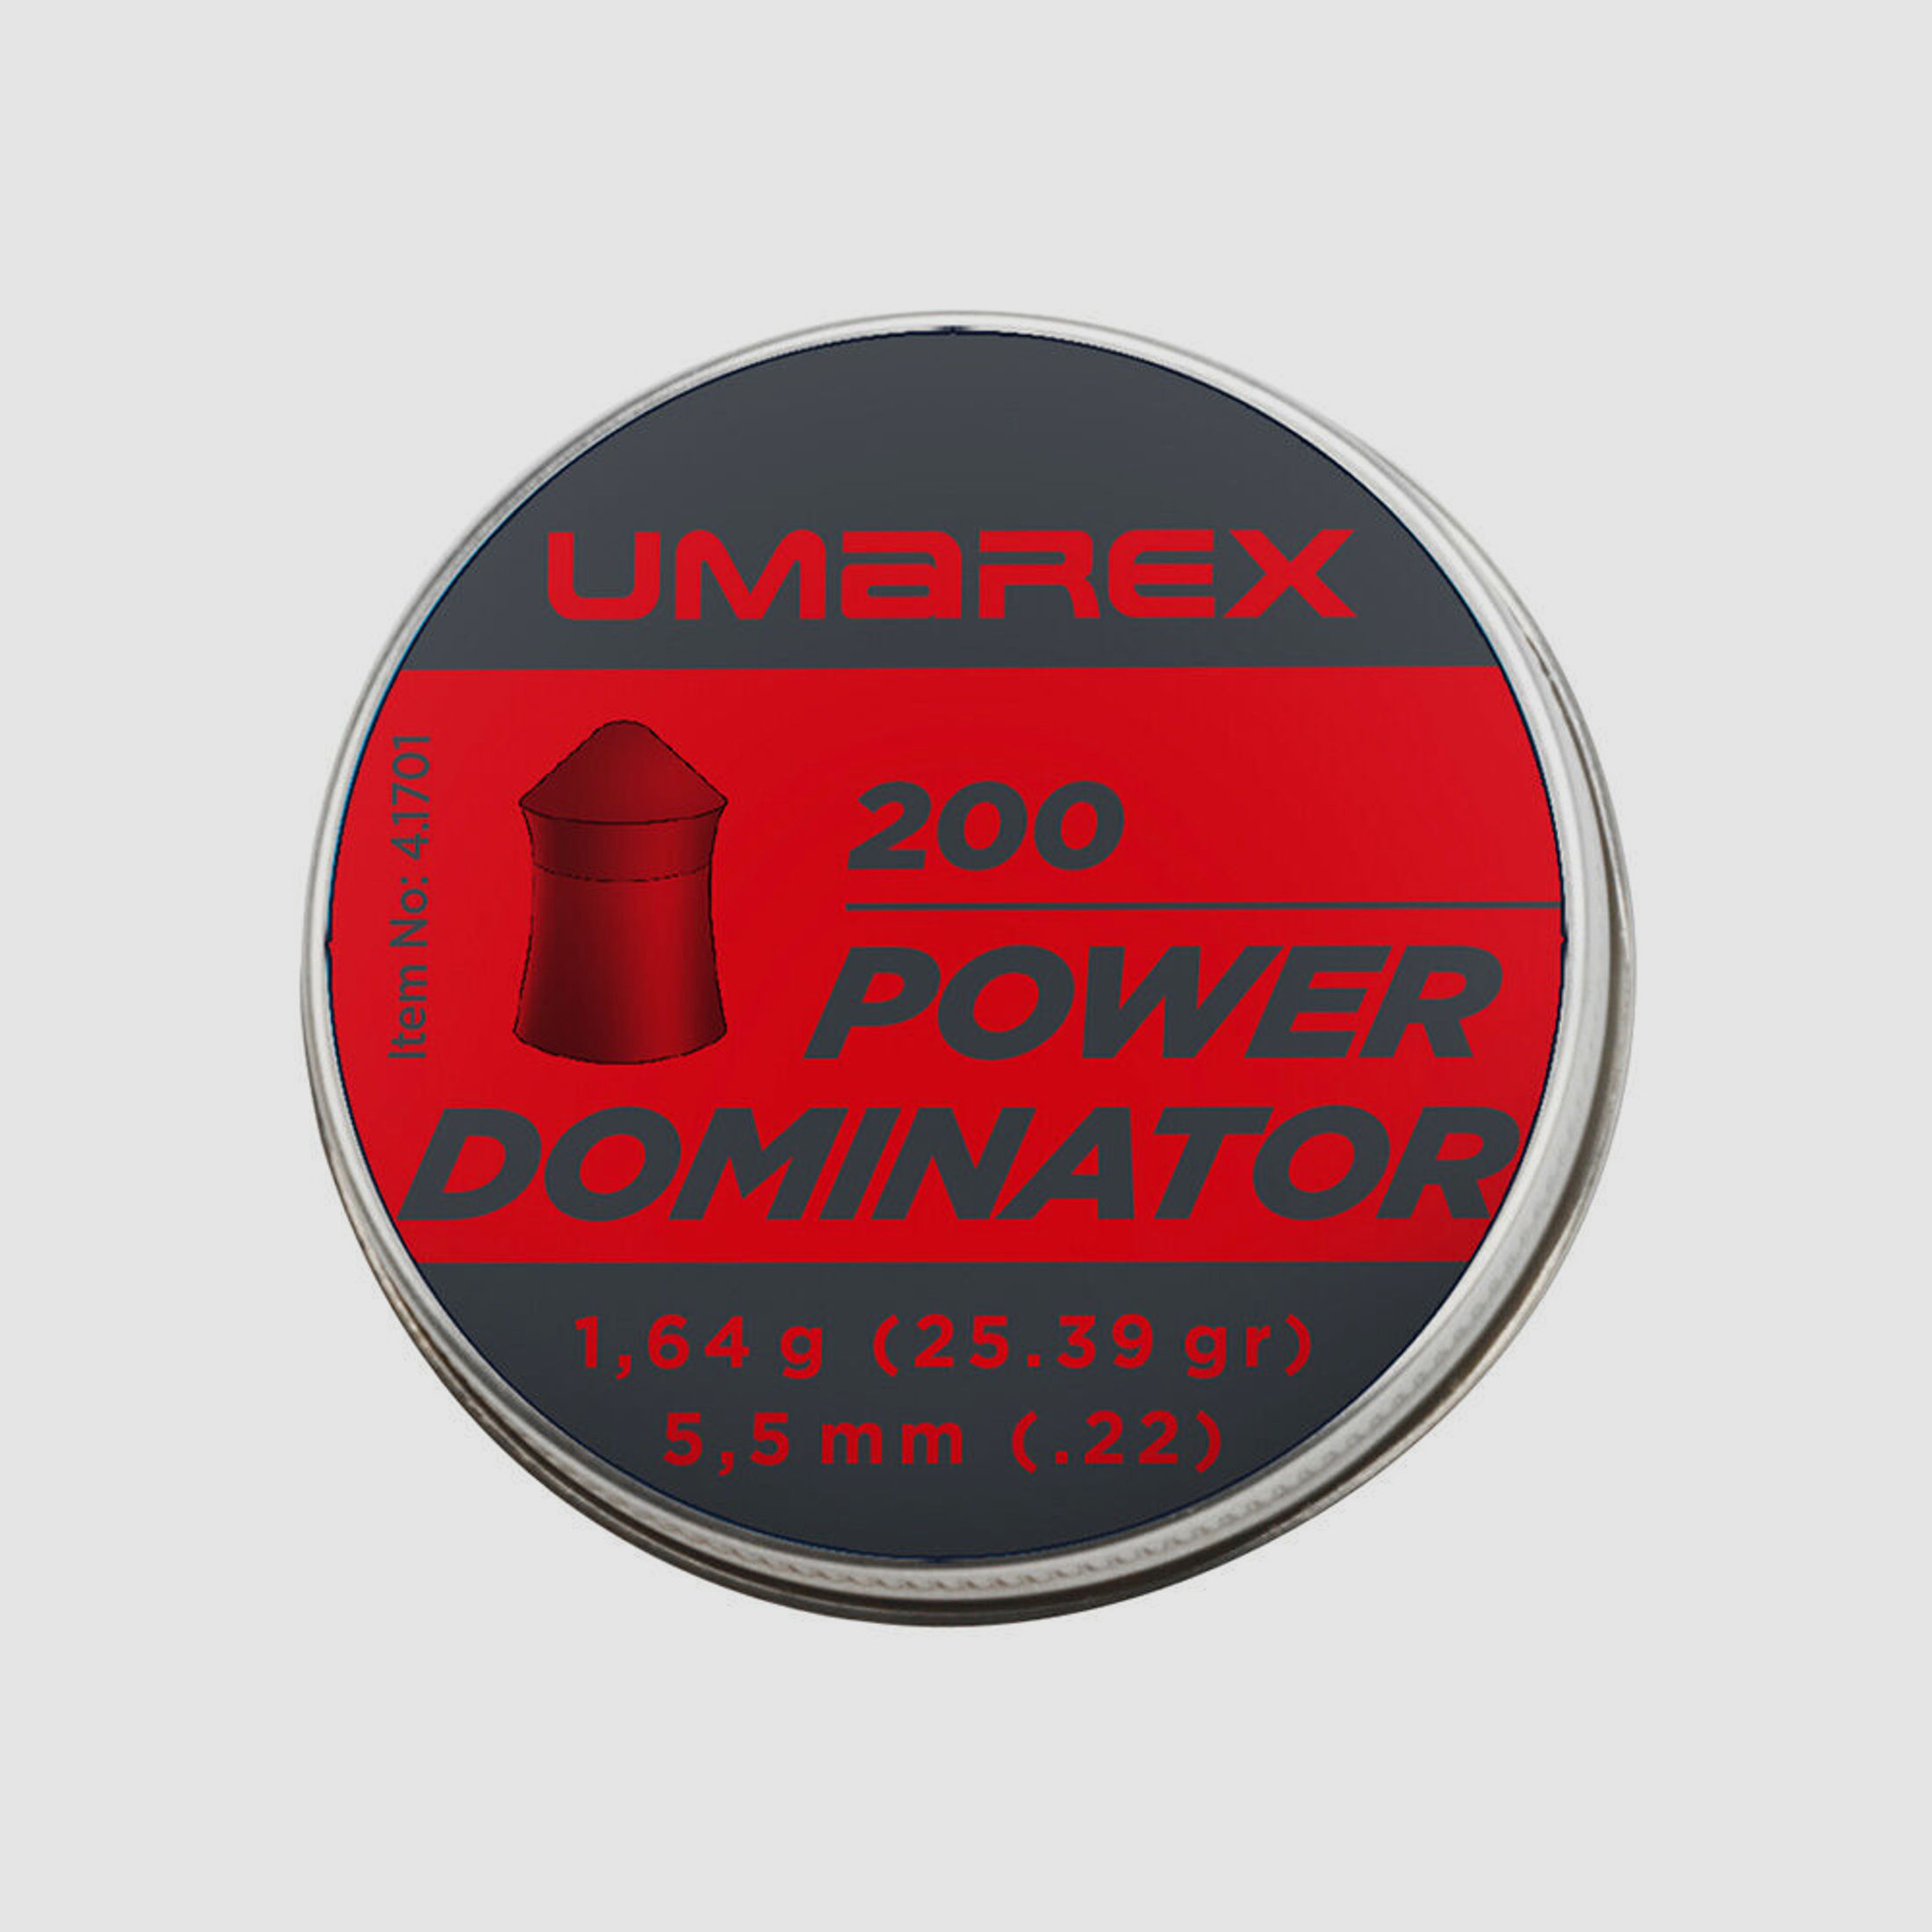 Umarex Power Dominator Spitzkopf Diabolos Kaliber 5,5 mm 1,645 g - 200 Stück pro Dose